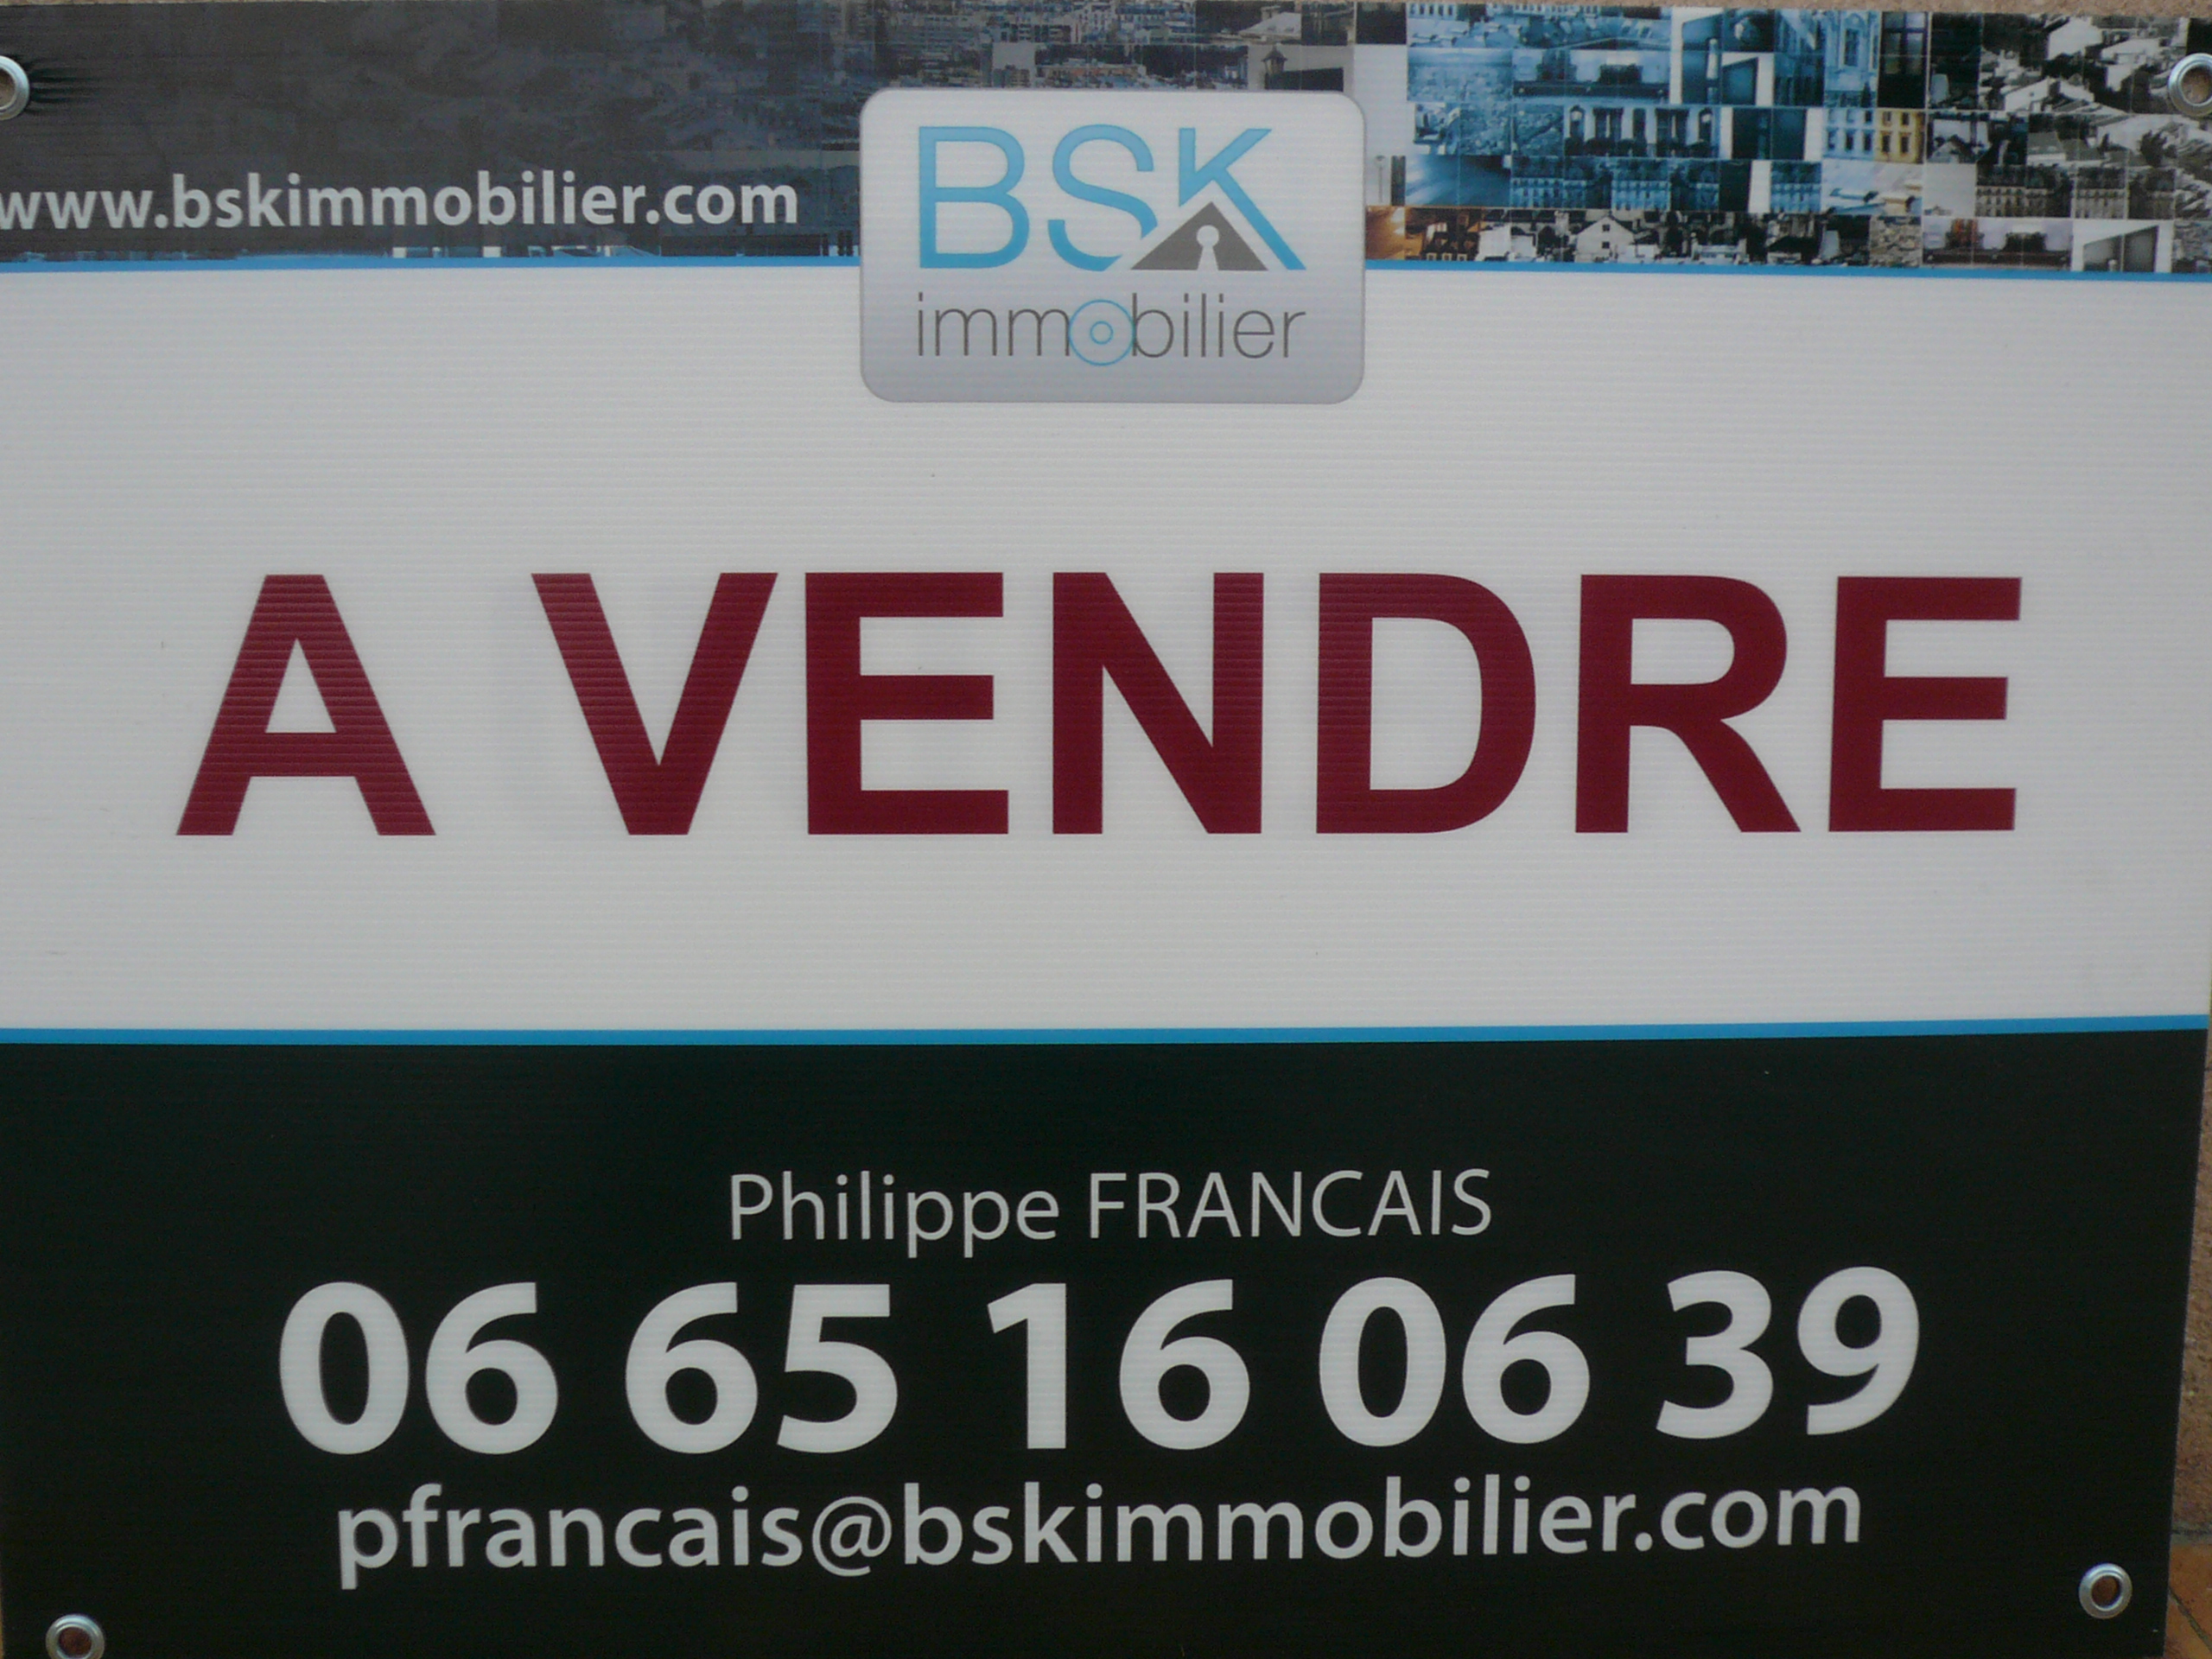 Philippe FRANCAIS - Agent Mandataire BSK Immobilier